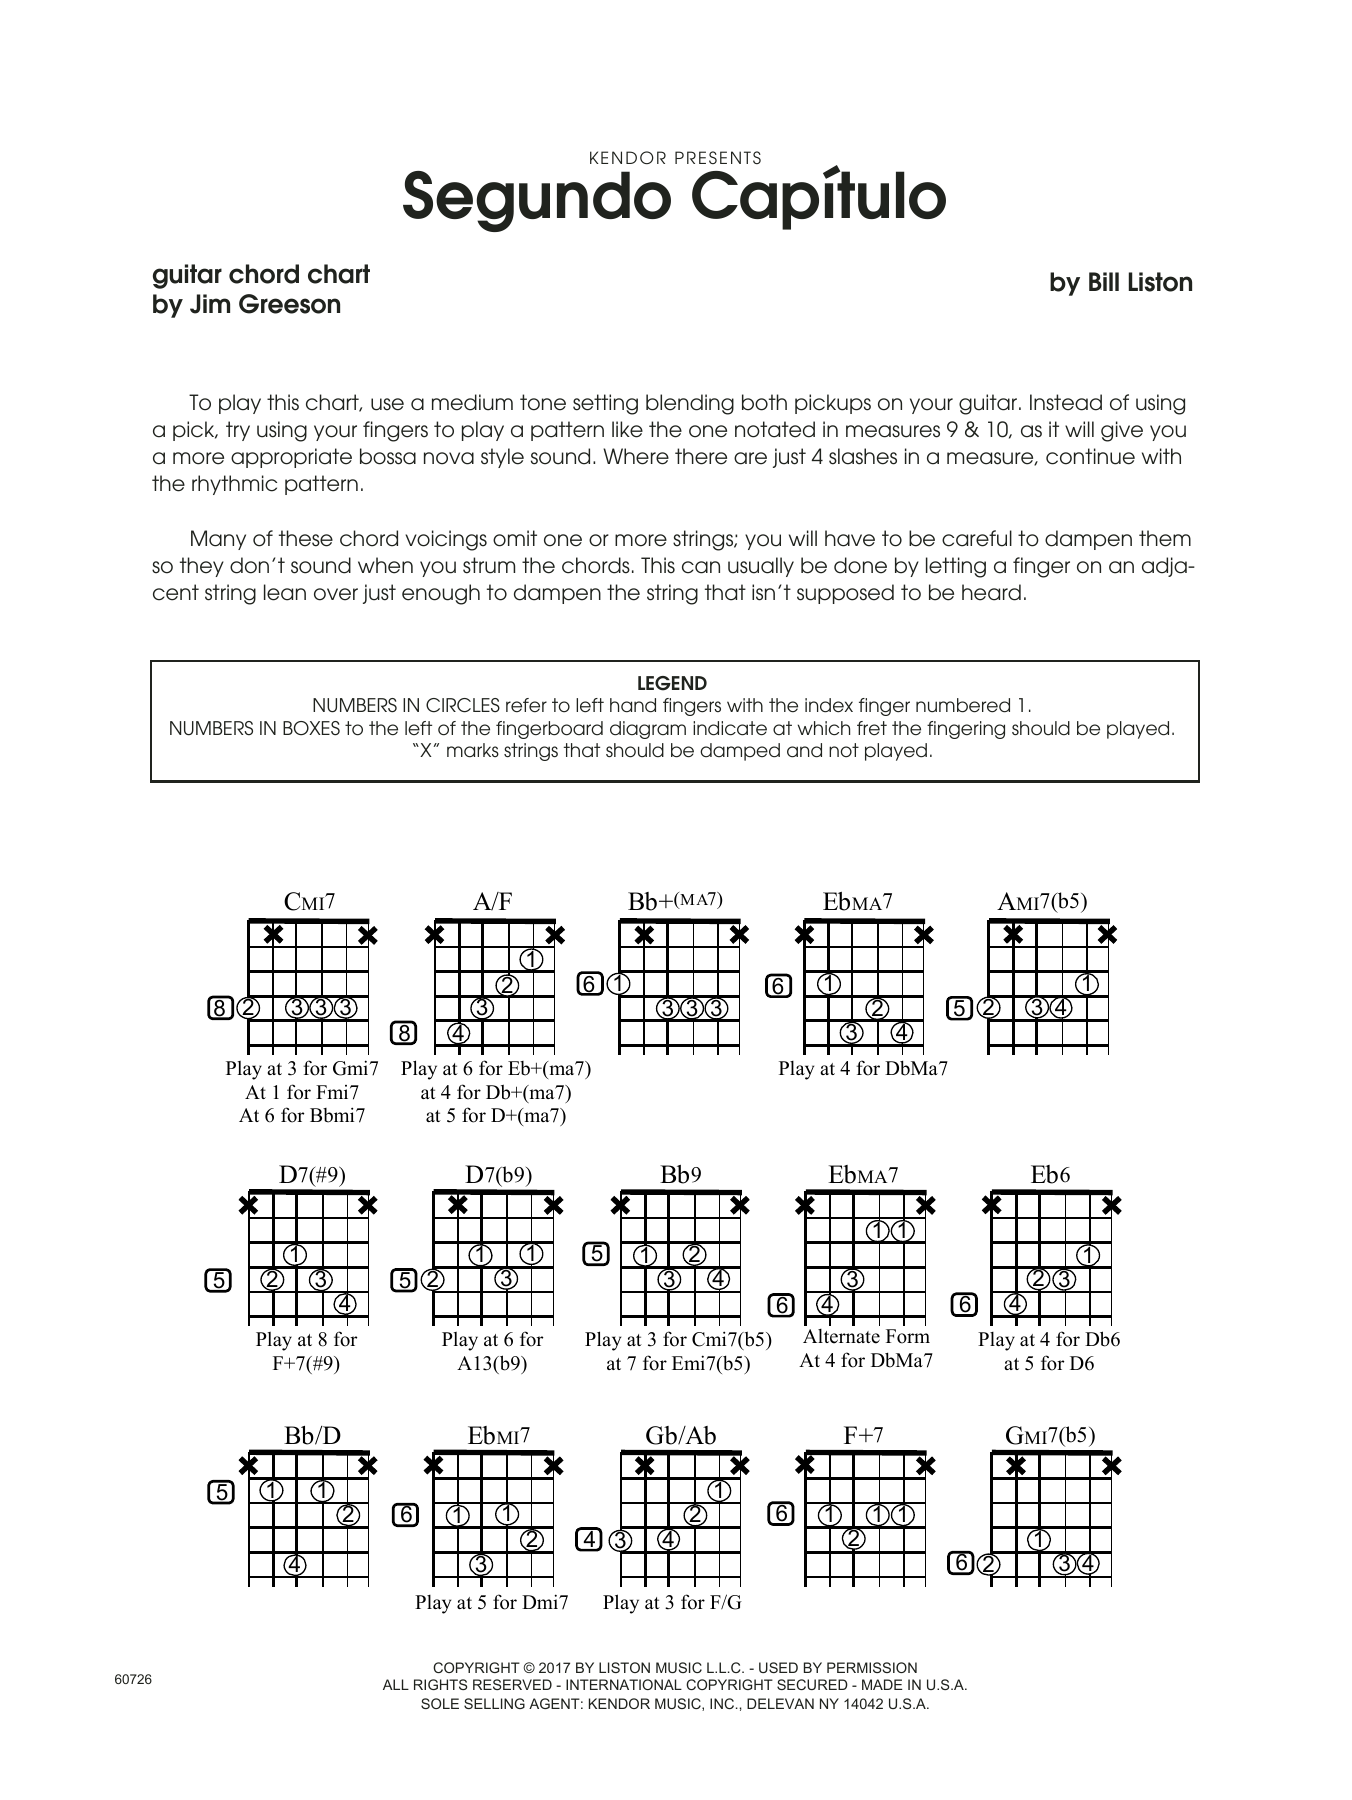 Download Bill Liston Segundo Capitulo - Guitar Chord Chart Sheet Music